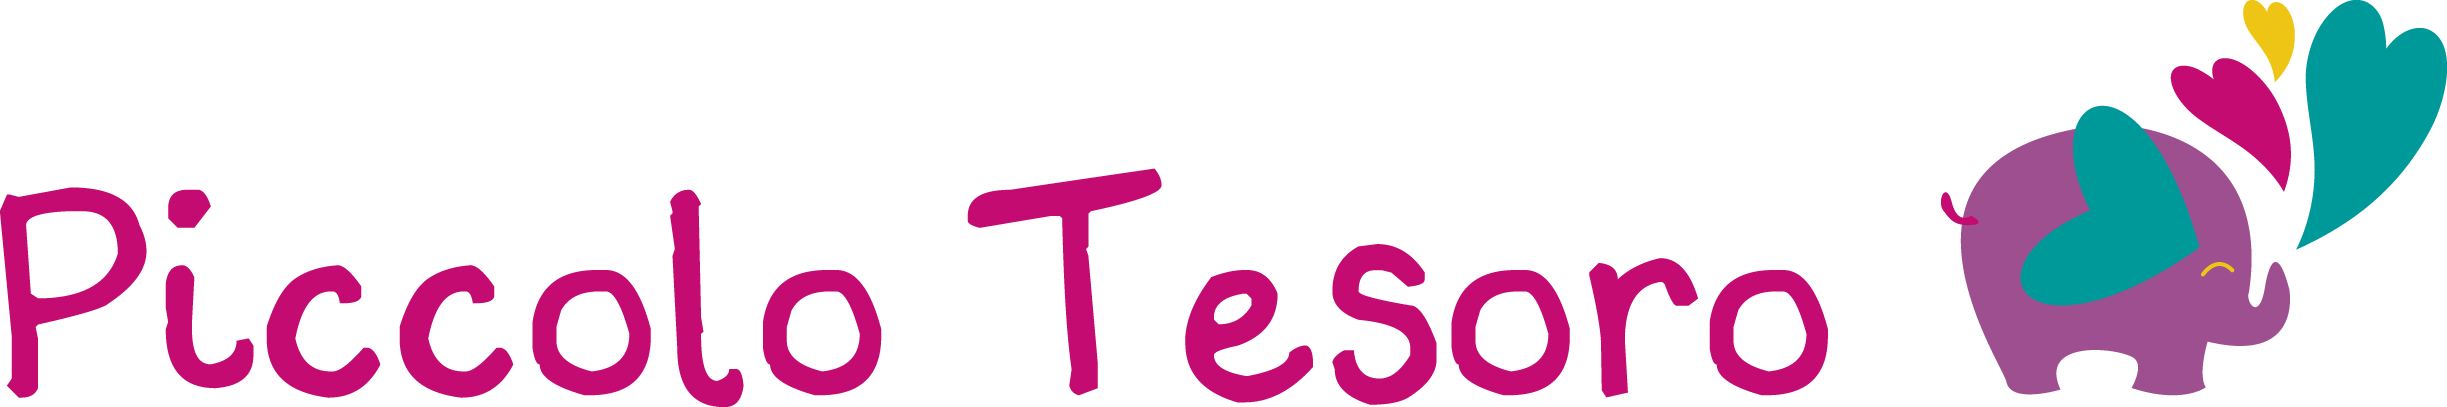 PT-logo-nowe-2017